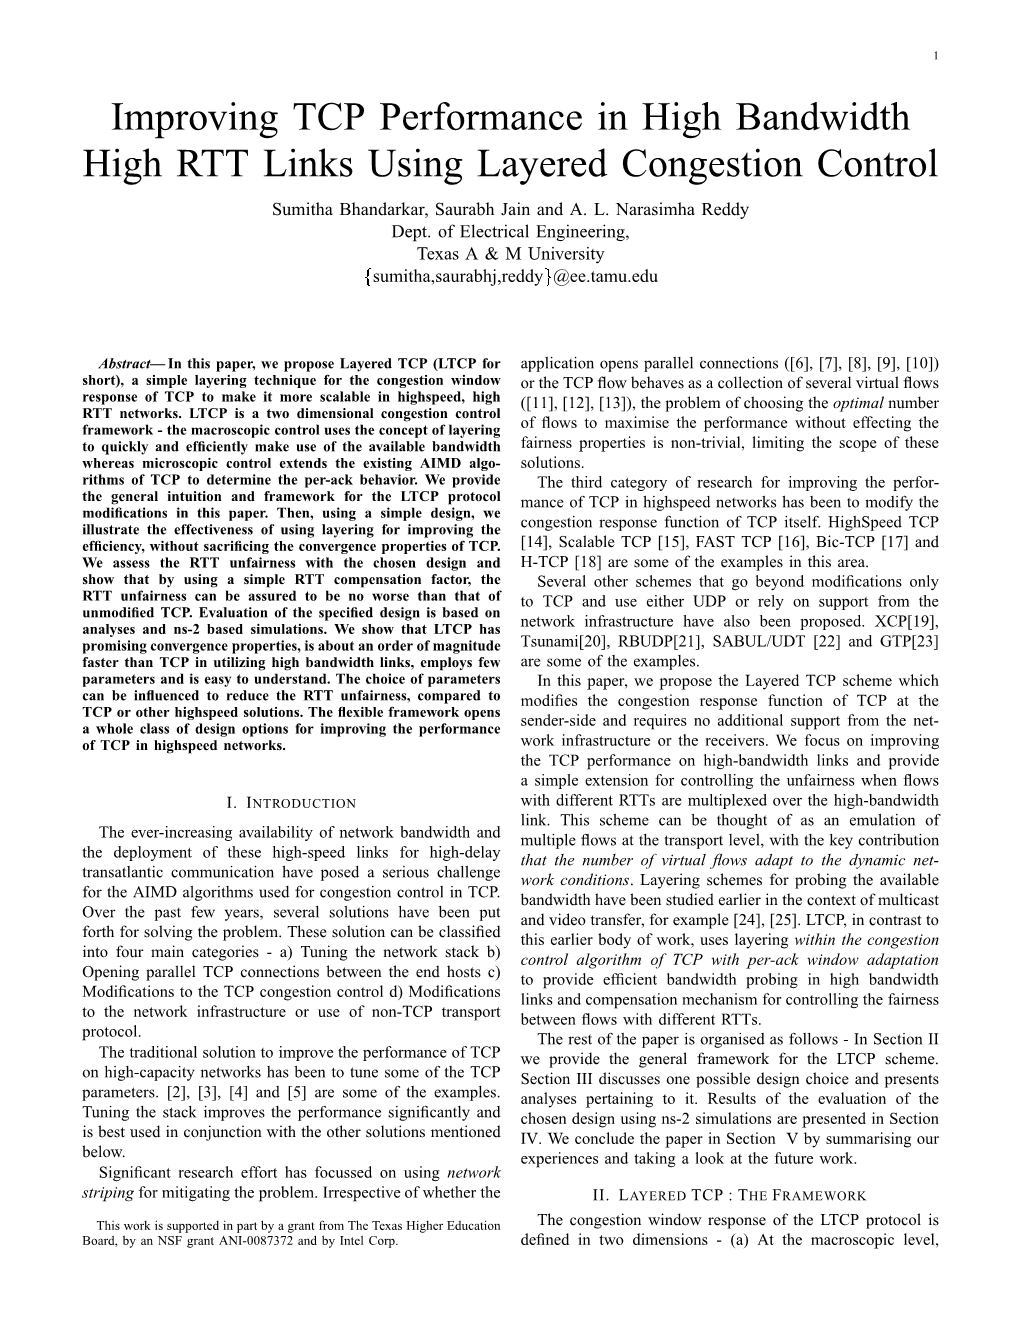 Improving TCP Performance in High Bandwidth High RTT Links Using Layered Congestion Control Sumitha Bhandarkar, Saurabh Jain and A